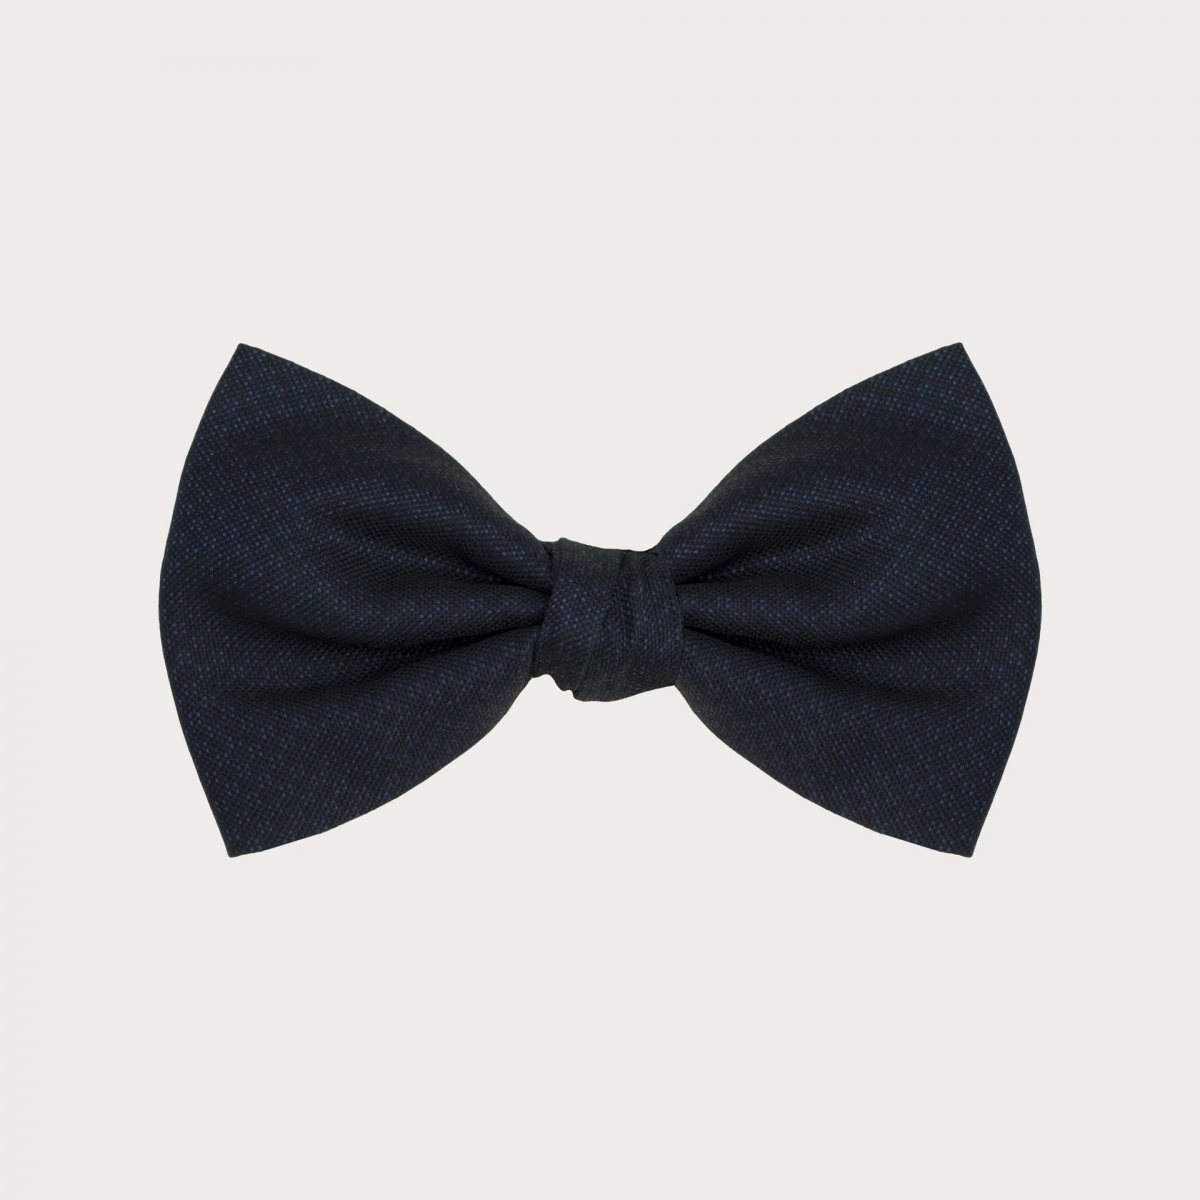 Bow tie in jacquard silk, blue tone on tone